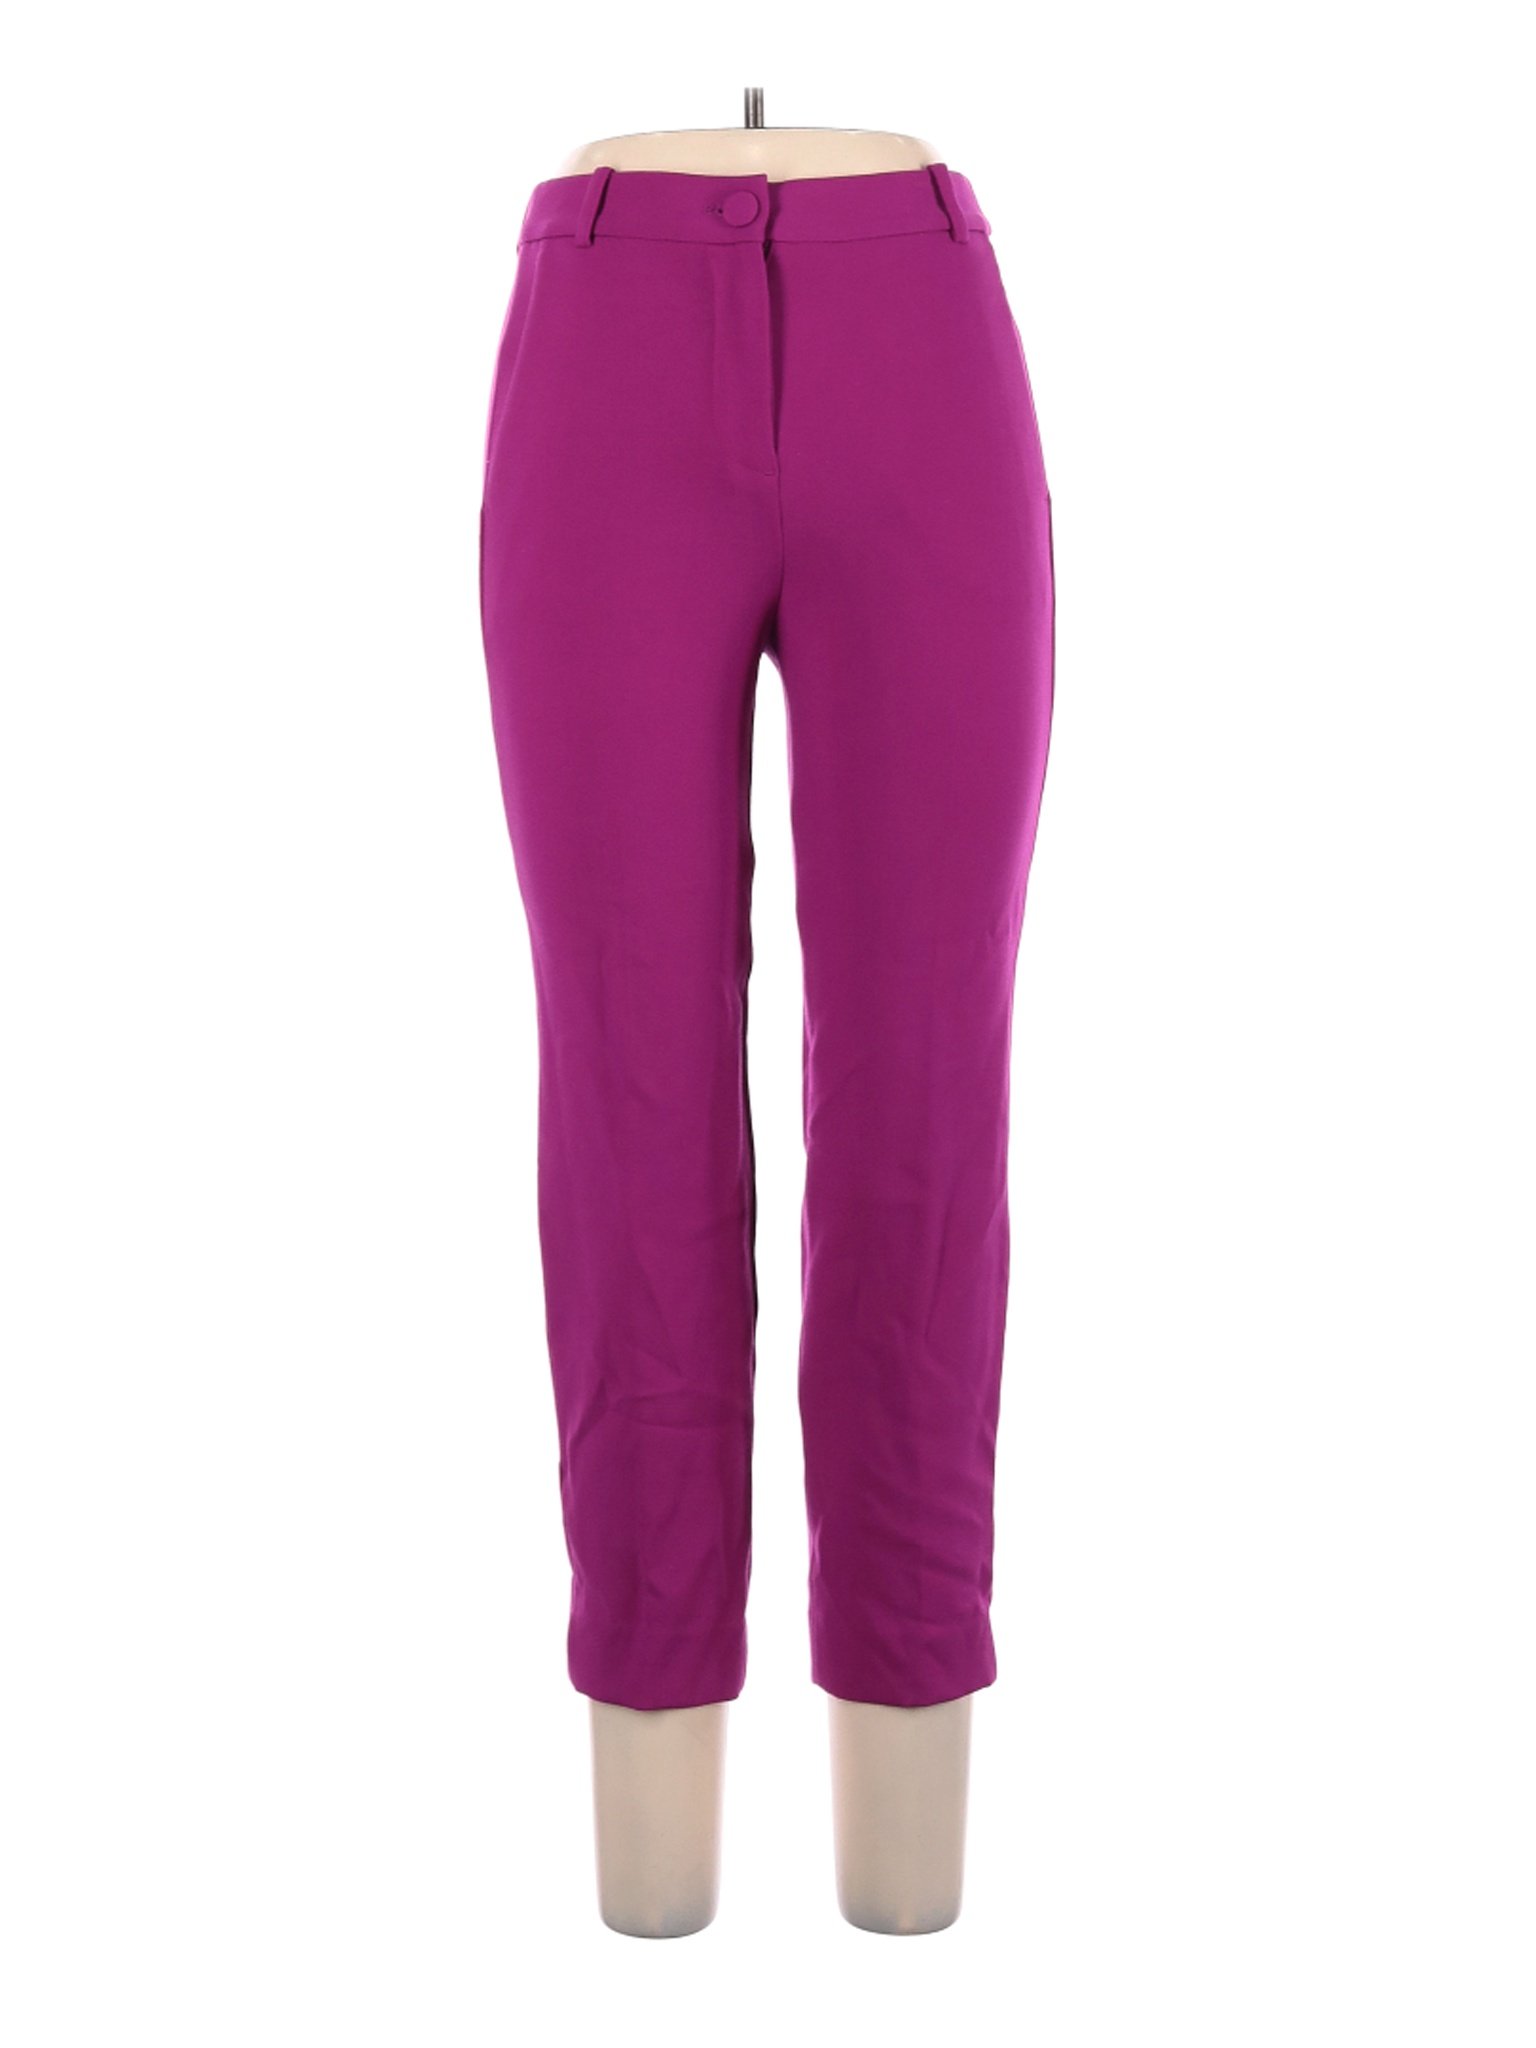 NWT J.Crew Women Purple Dress Pants 6 Petites | eBay